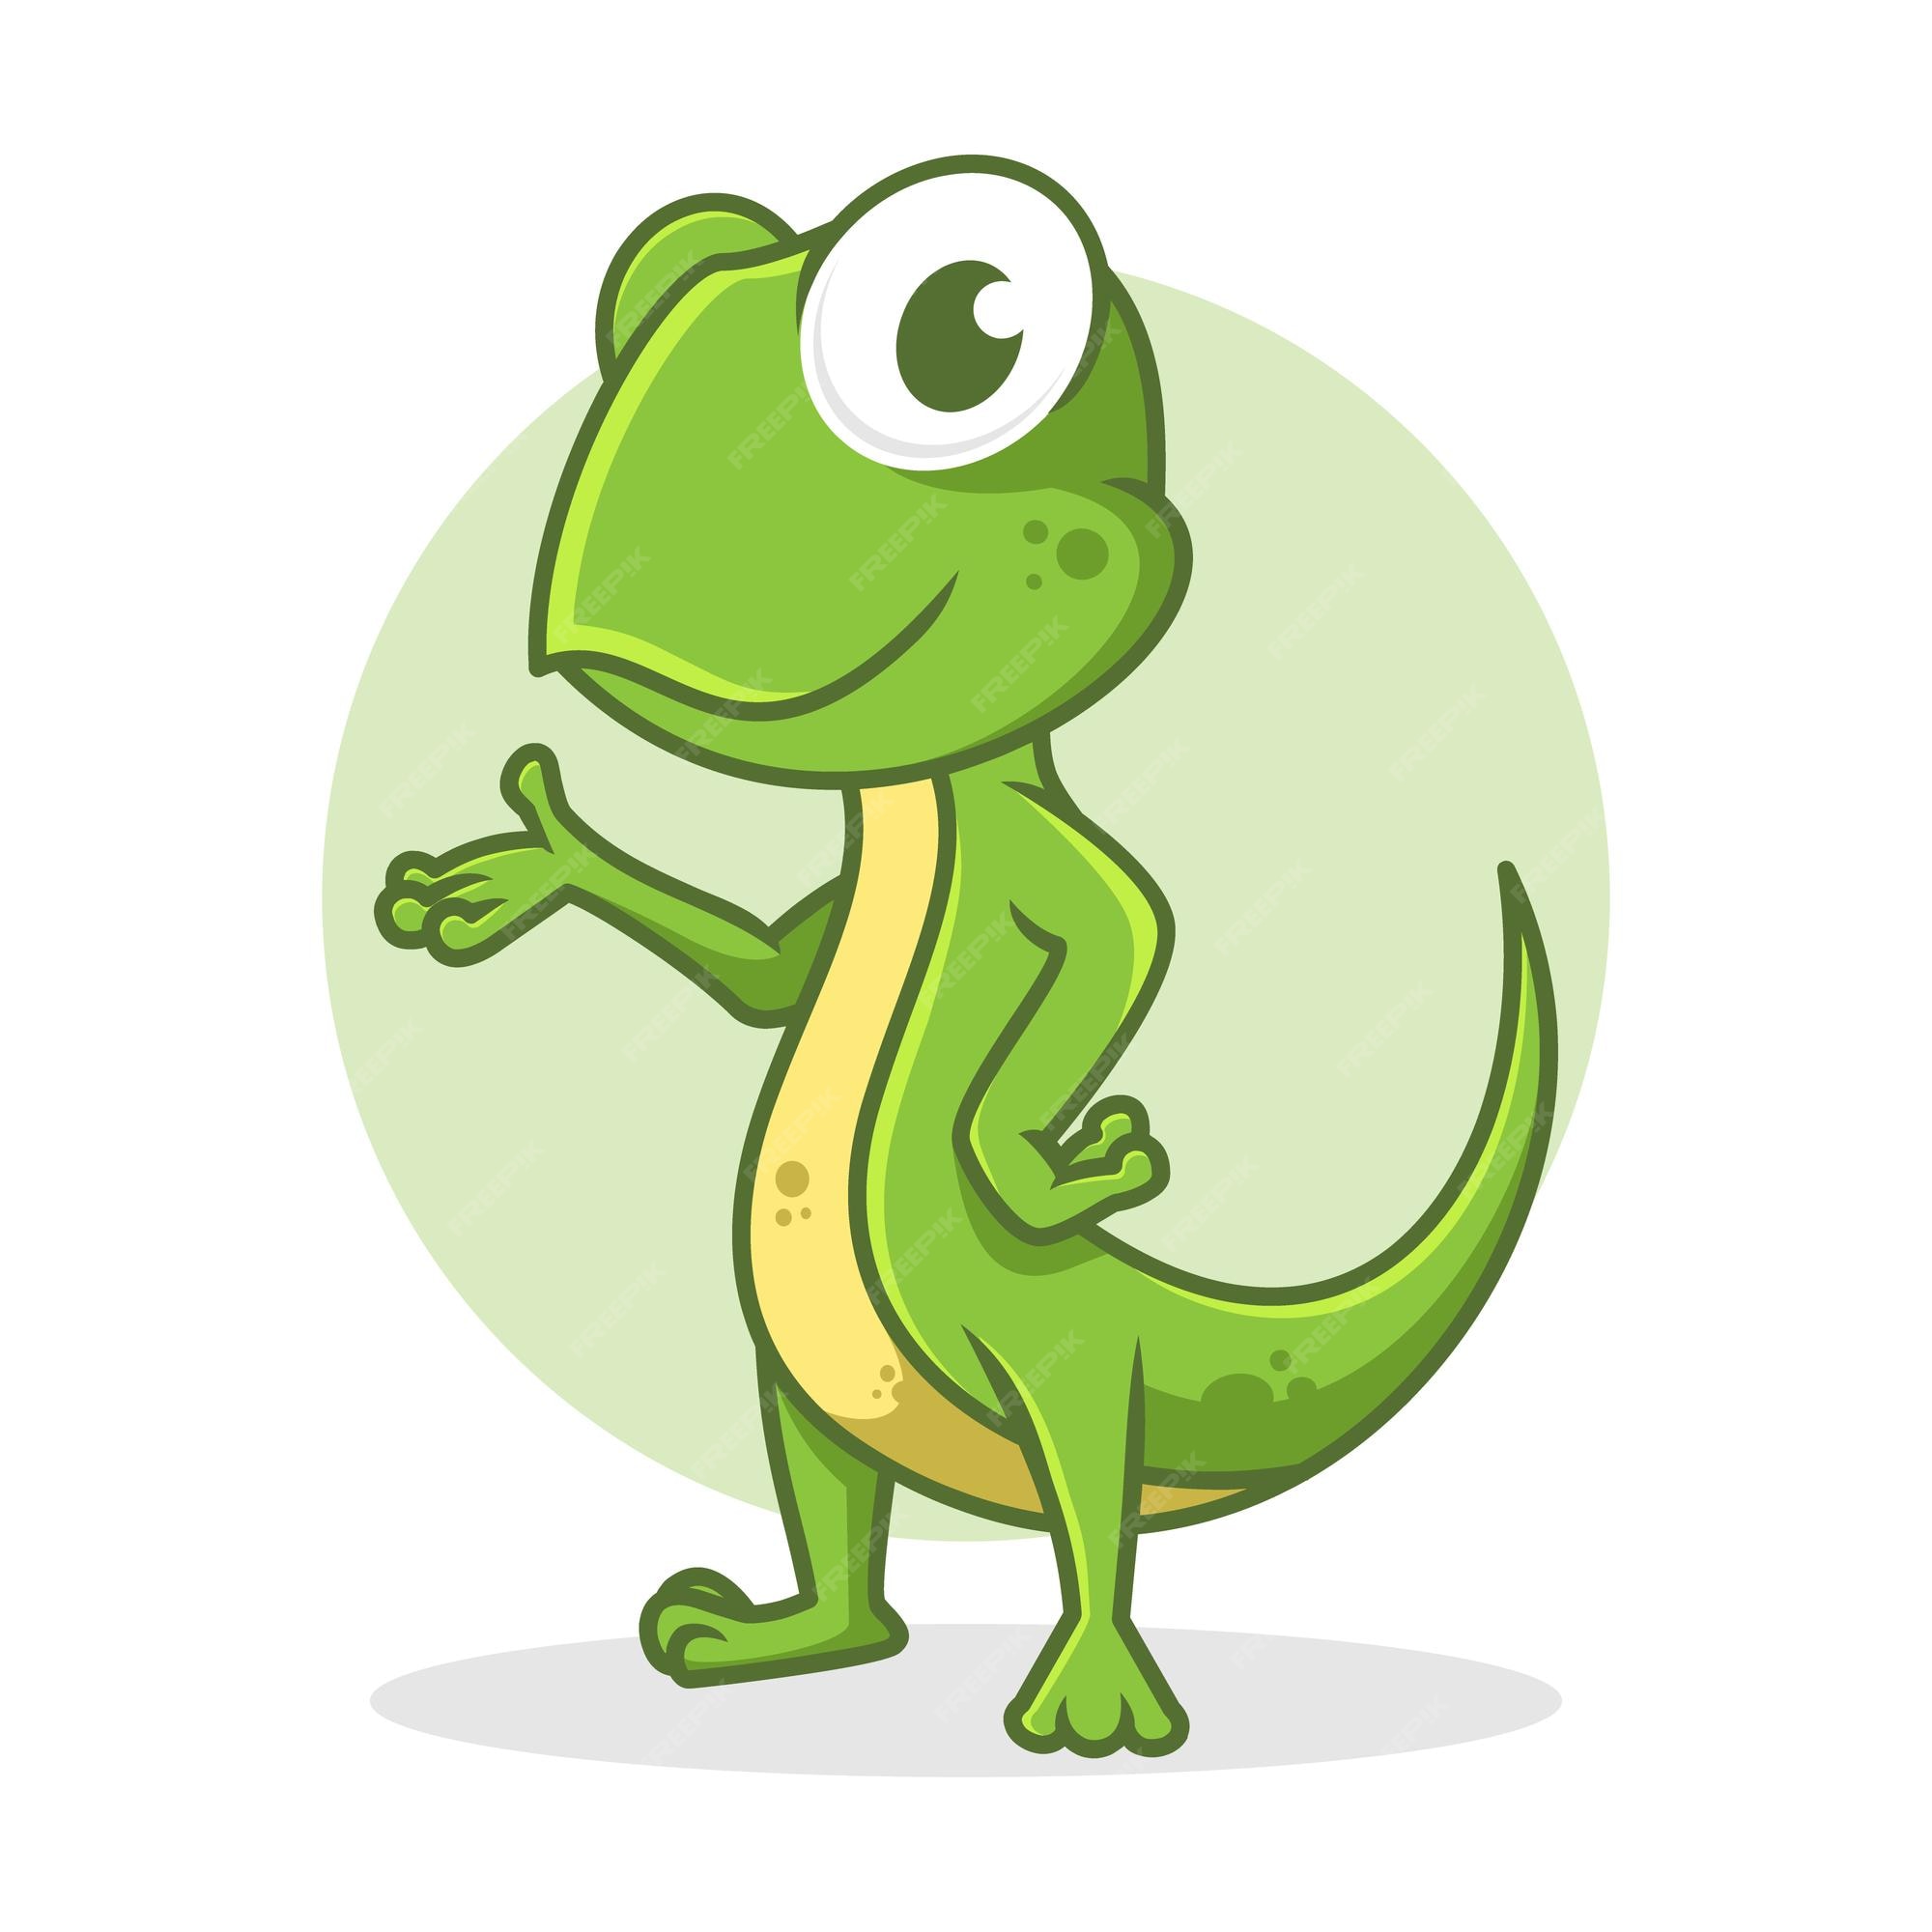 Premium Vector | Funny lizard cartoon character